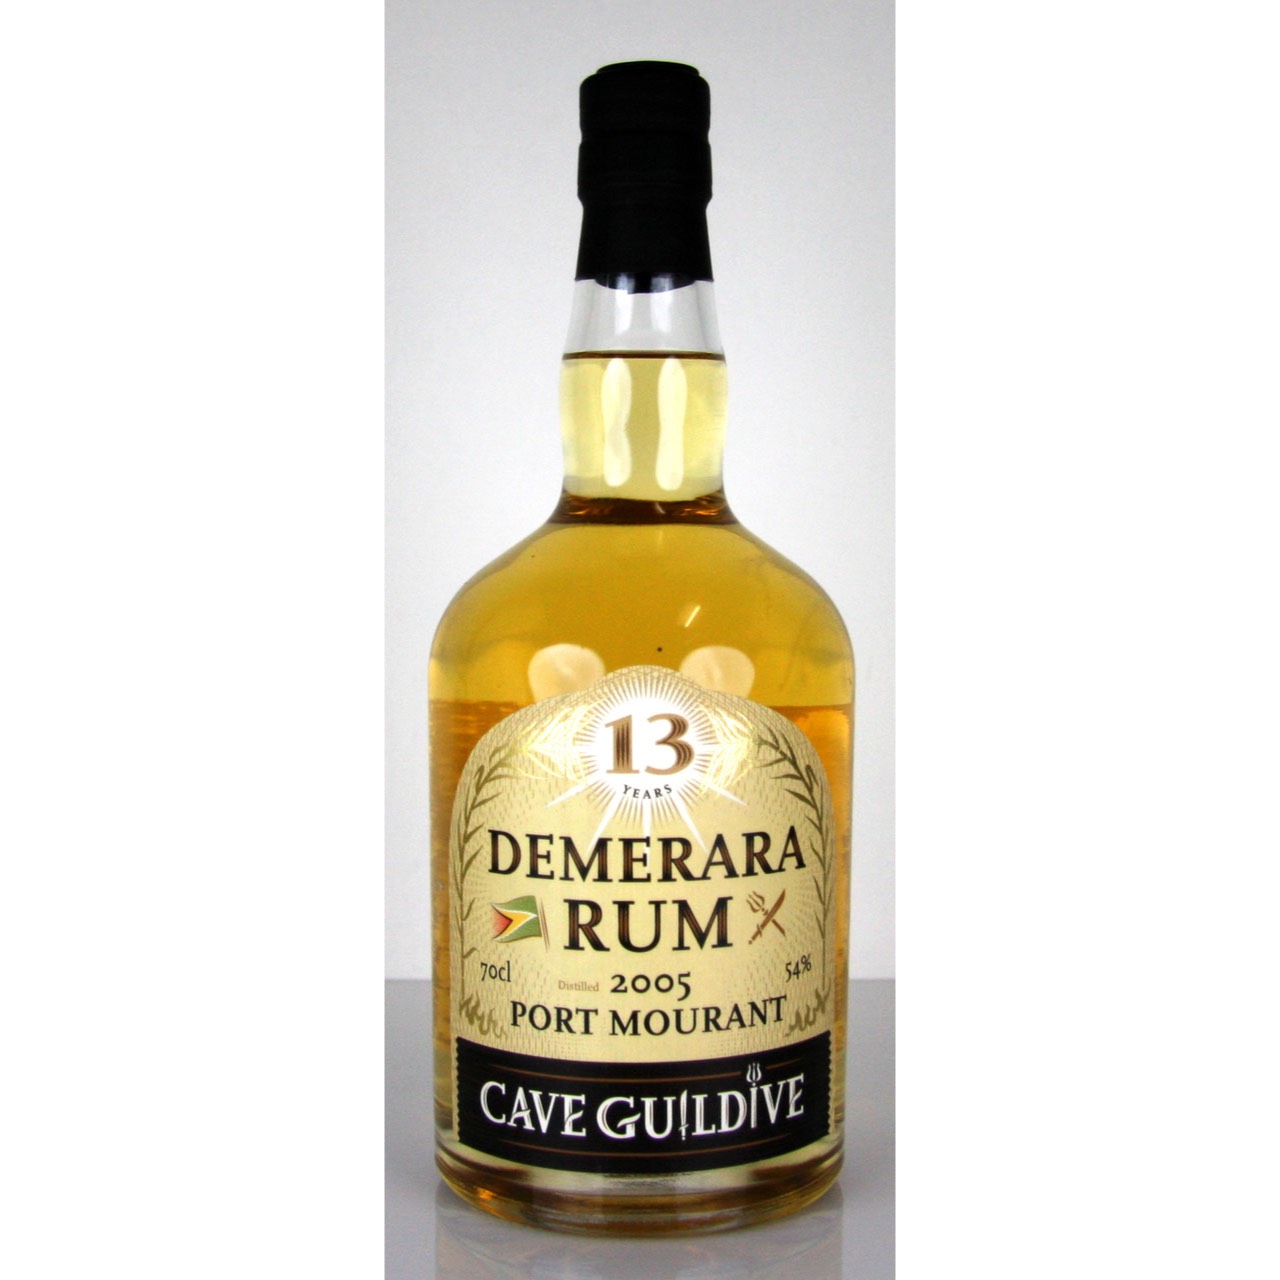 Bottle image of Demerara Rum PM